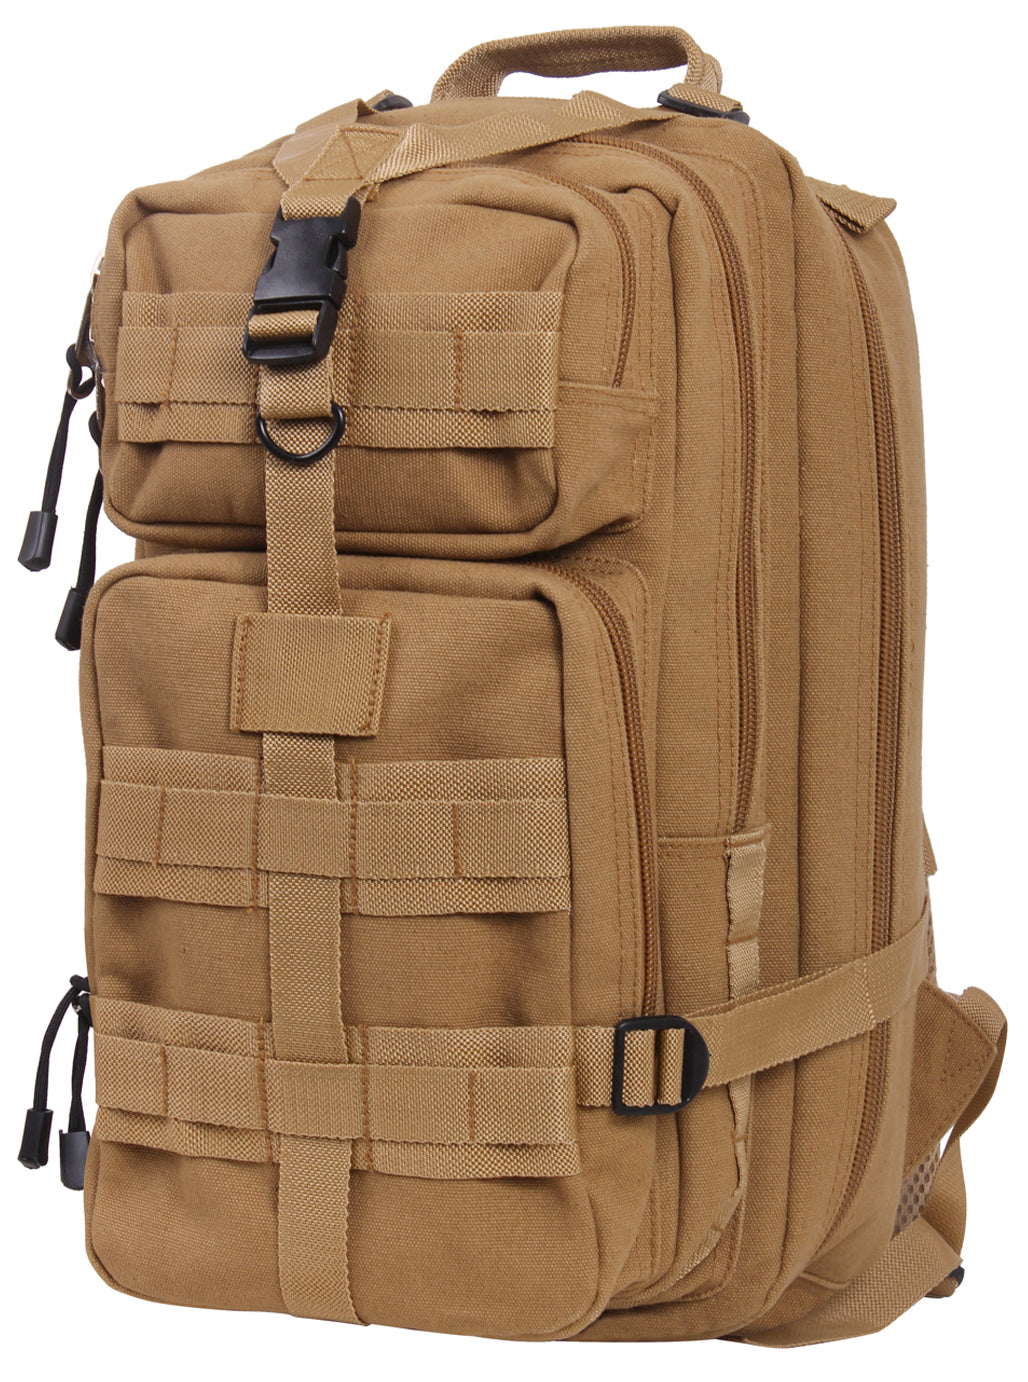 Milspec Tacticanvas Go Pack Backpacks MilTac Tactical Military Outdoor Gear Australia